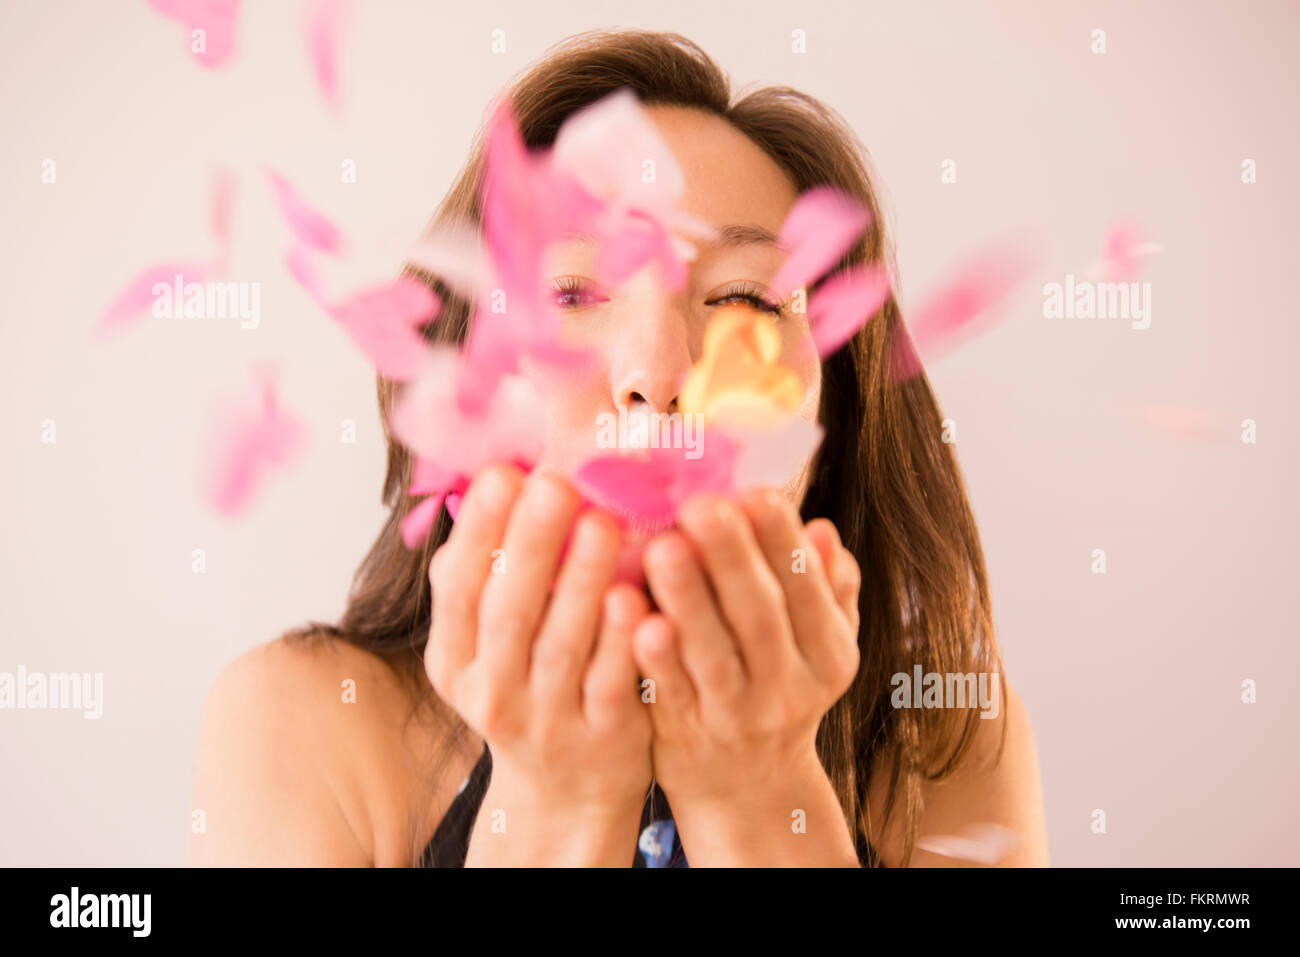 Mixed race woman blowing confetti Stock Photo